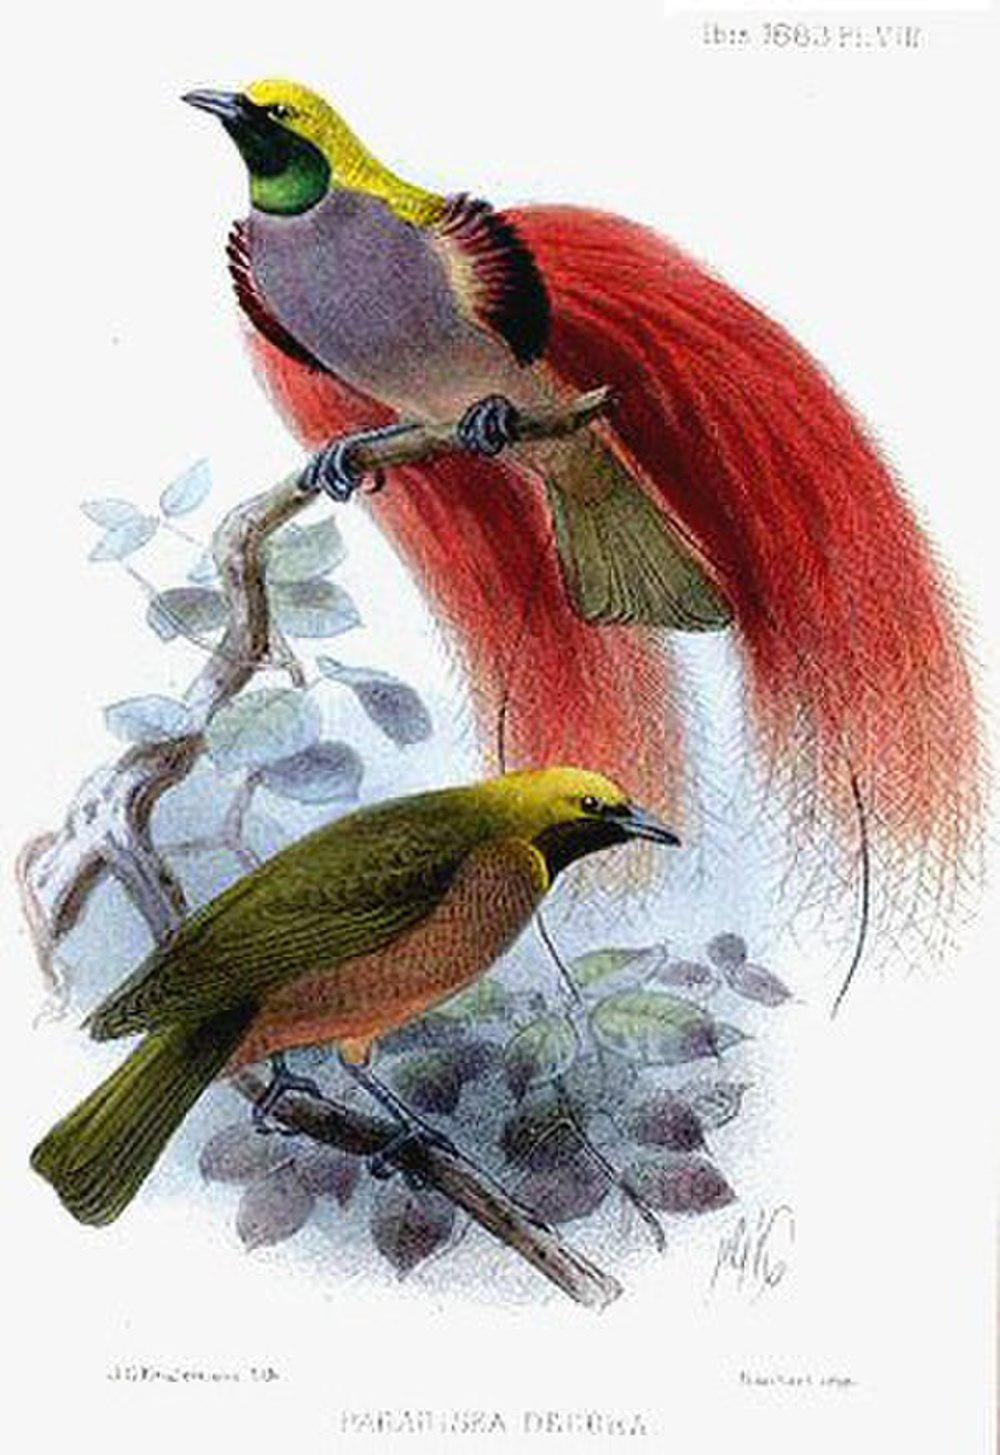 戈氏极乐鸟 / Goldie\'s Bird-of-paradise / Paradisaea decora